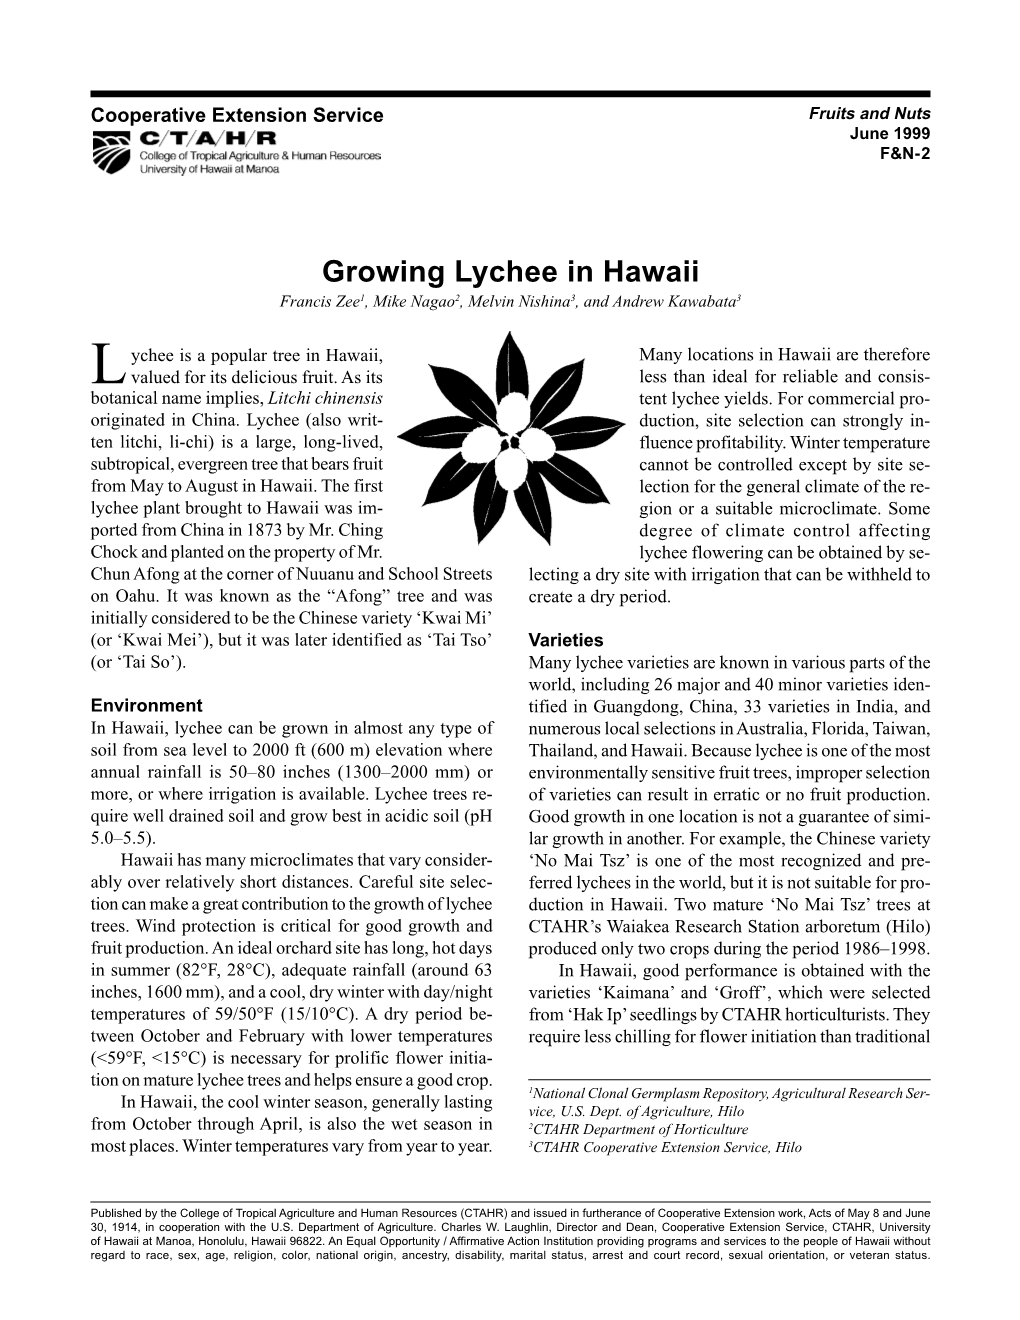 Growing Lychee in Hawaii Francis Zee1, Mike Nagao2, Melvin Nishina3, and Andrew Kawabata3